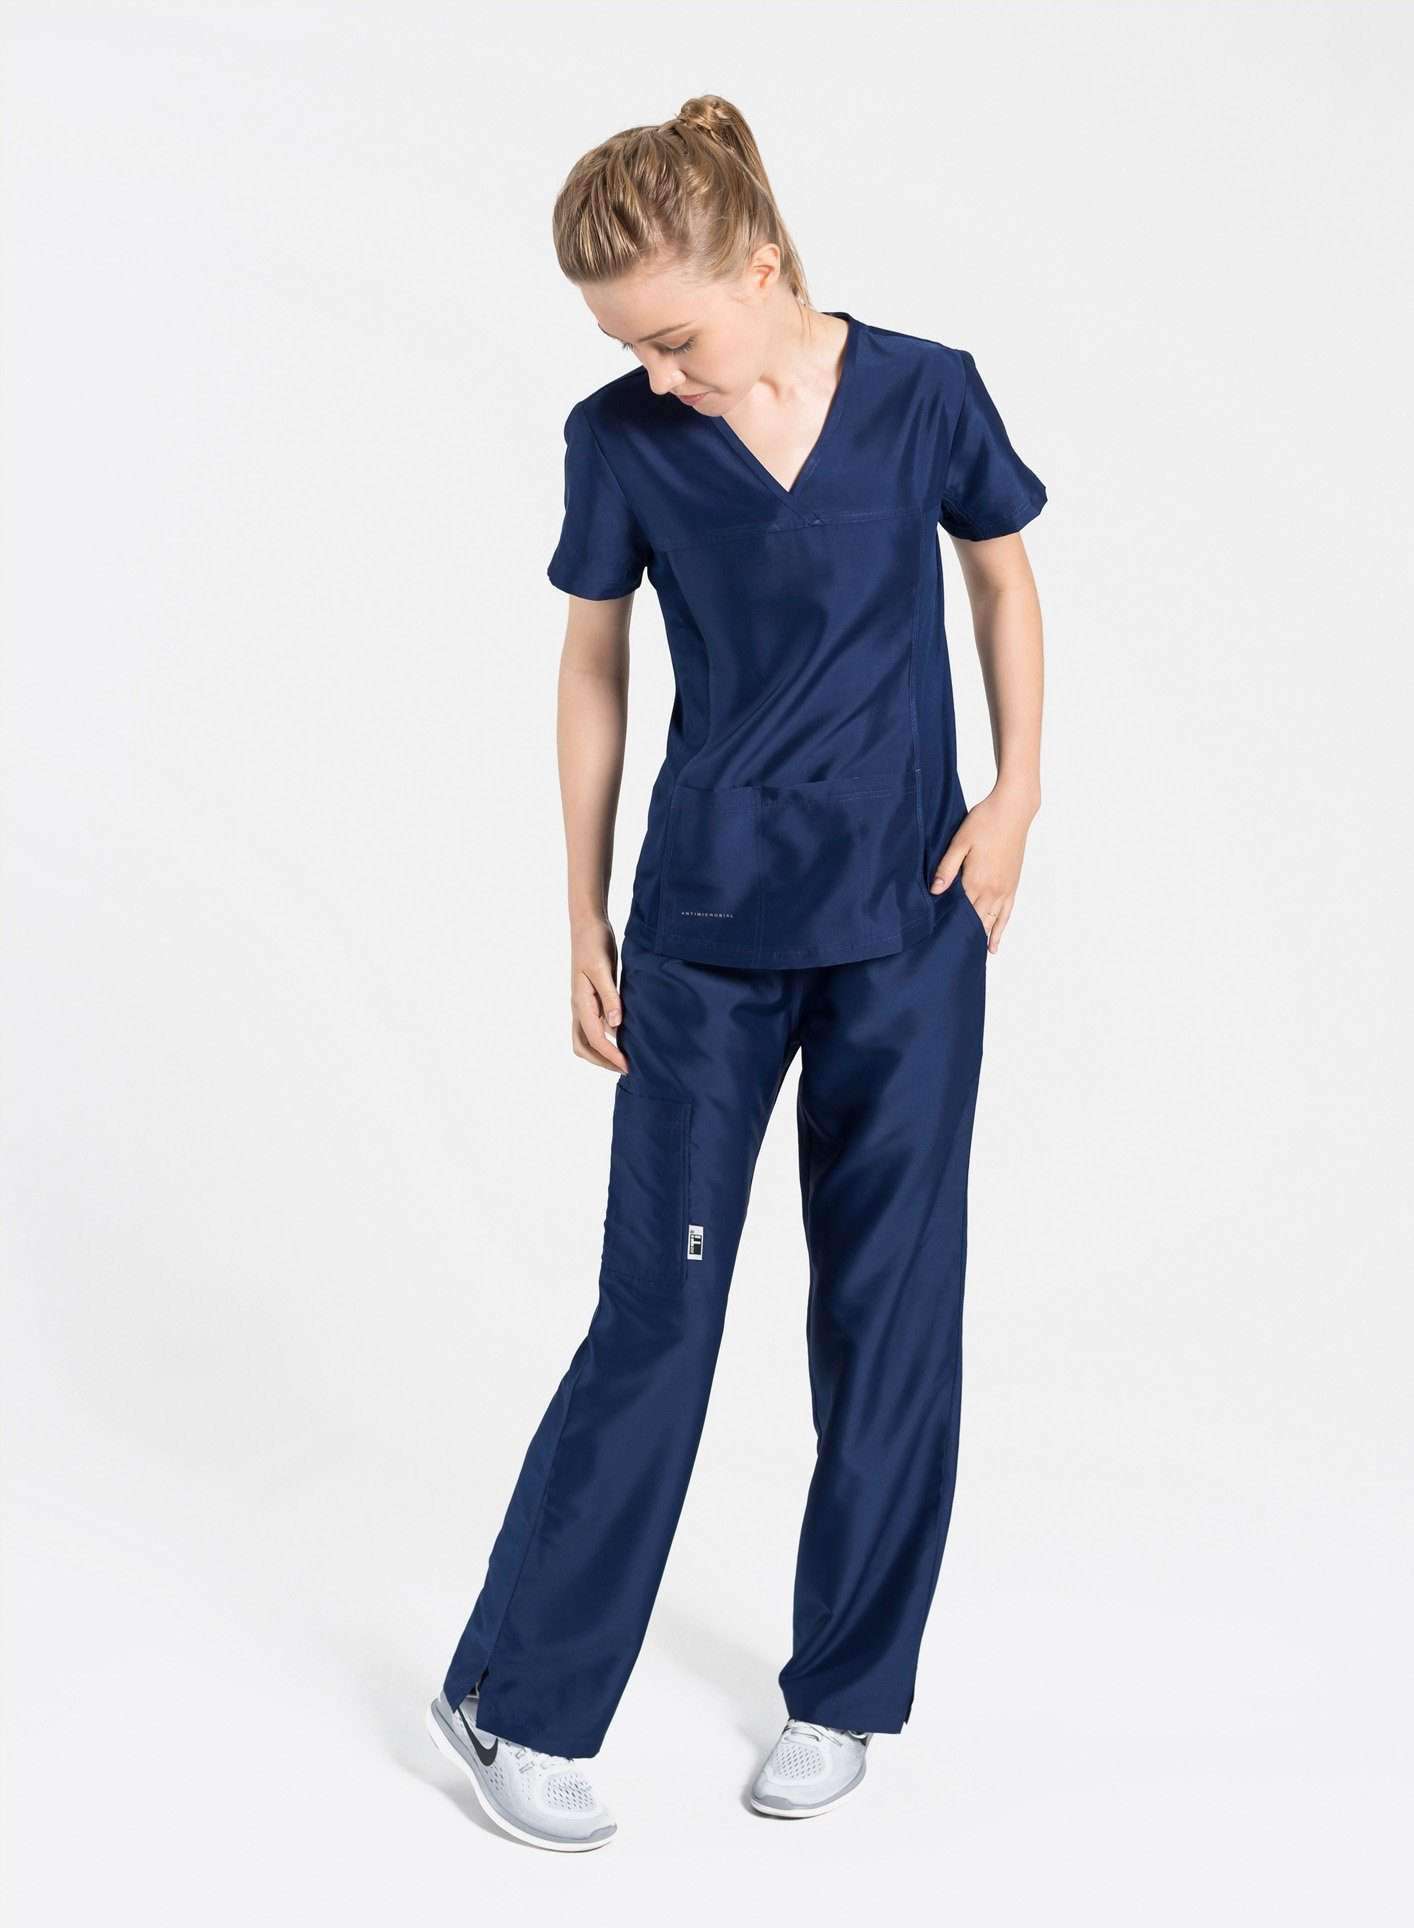 womens Elements short sleeve three pocket scrub top navy blue